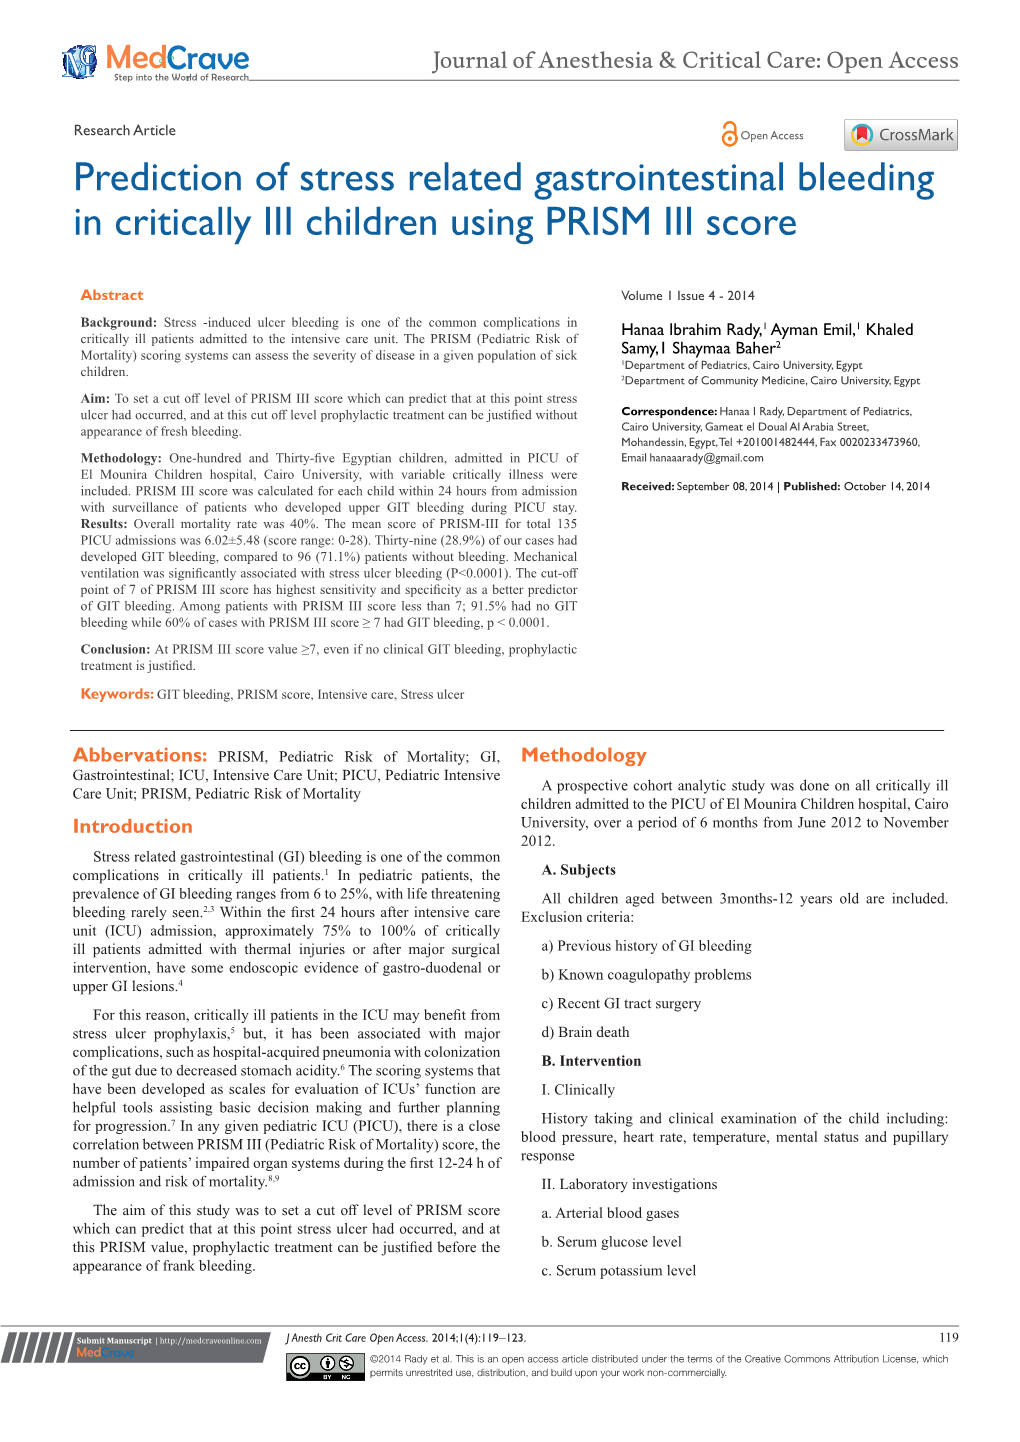 Prediction of Stress Related Gastrointestinal Bleeding in Critically III Children Using PRISM III Score